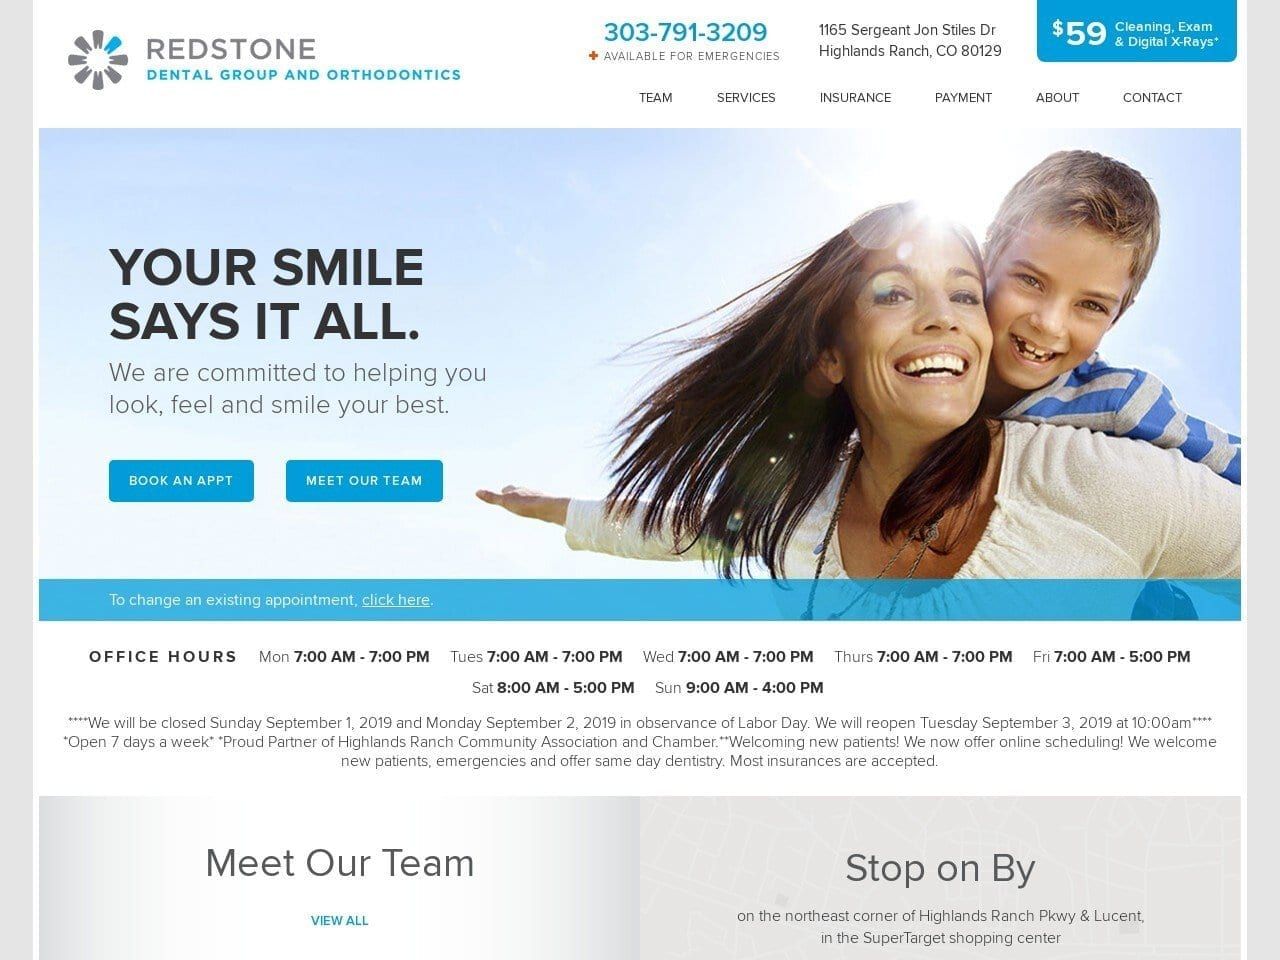 Redstone Dental Group and Orthodontics Website Screenshot from redstonedentalgroup.com